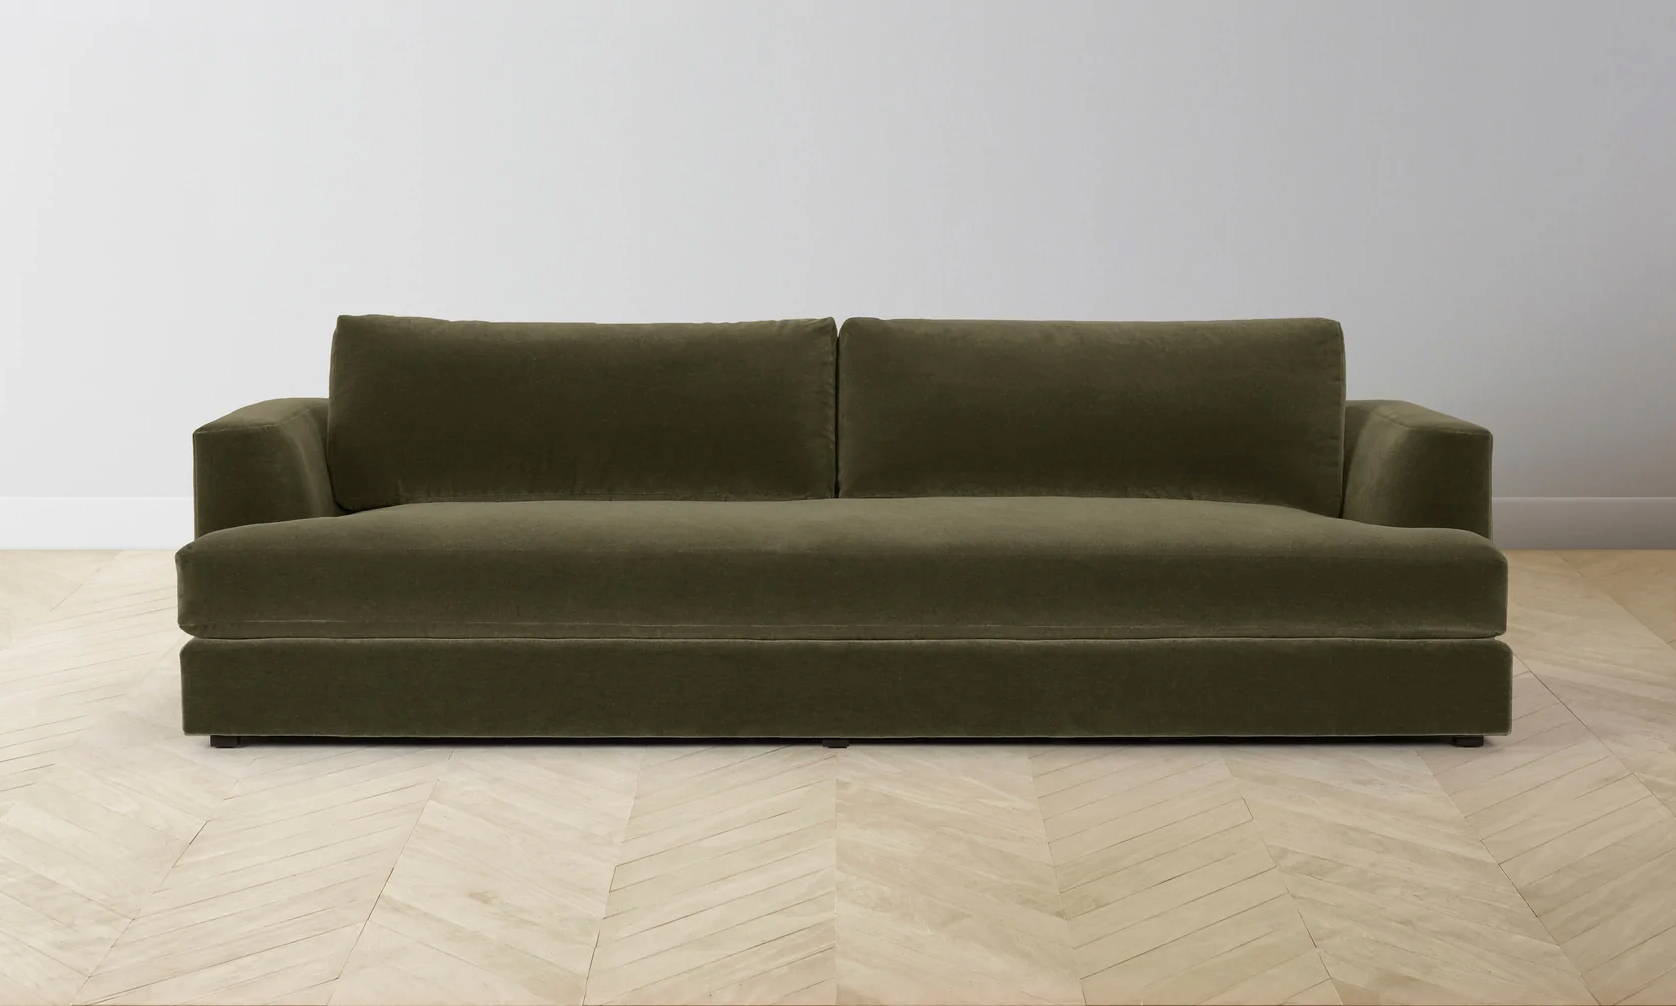 The Varick Sofa in Moss Mohair